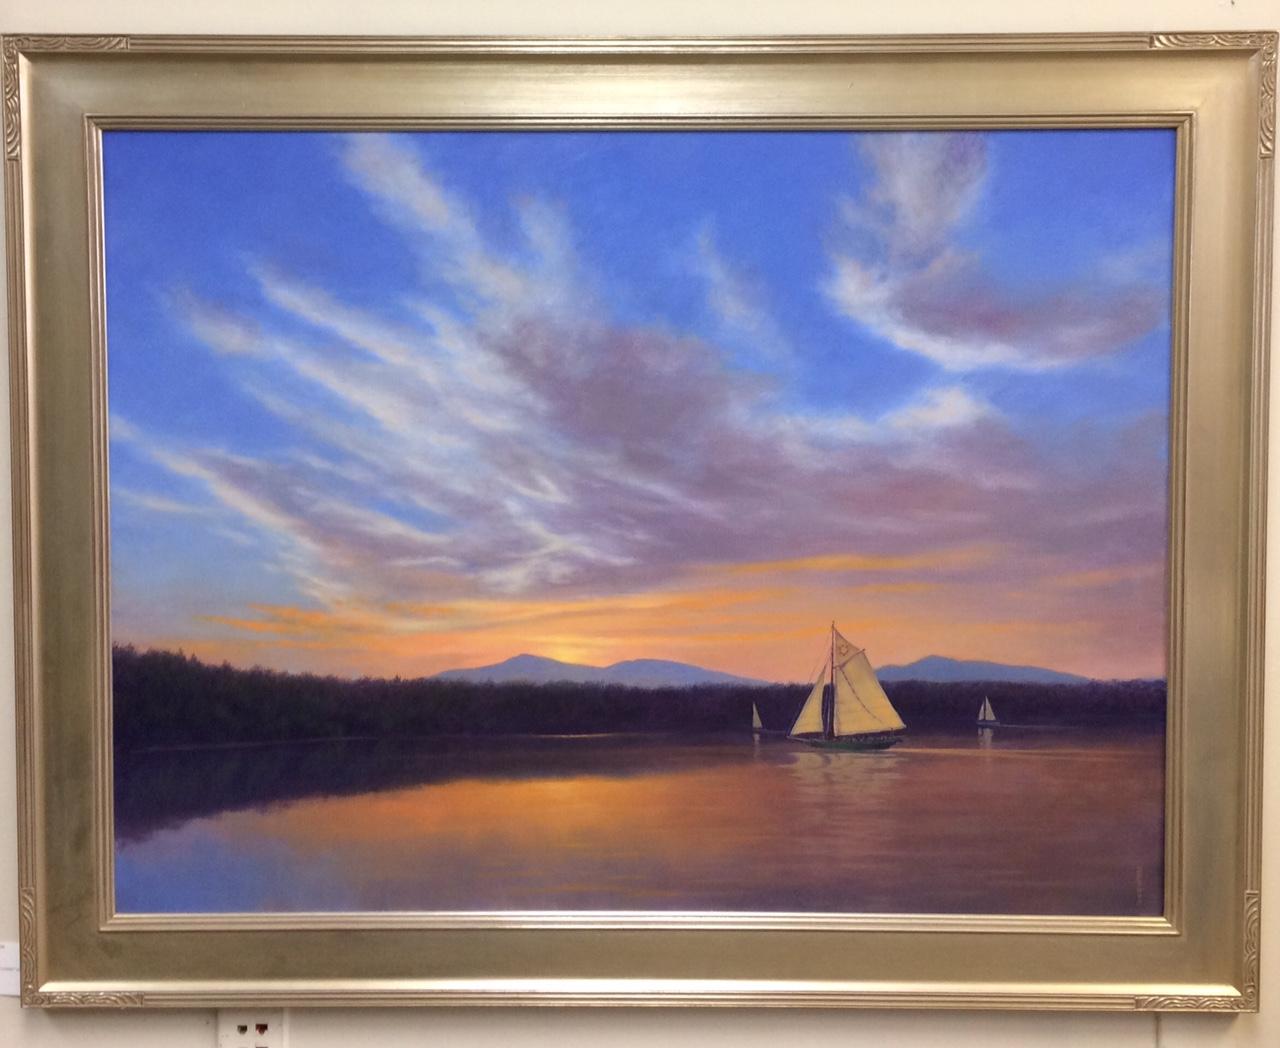 Barry DeBaun Landscape Painting - Clearwater's Sunset Voyage, original realistic seascape